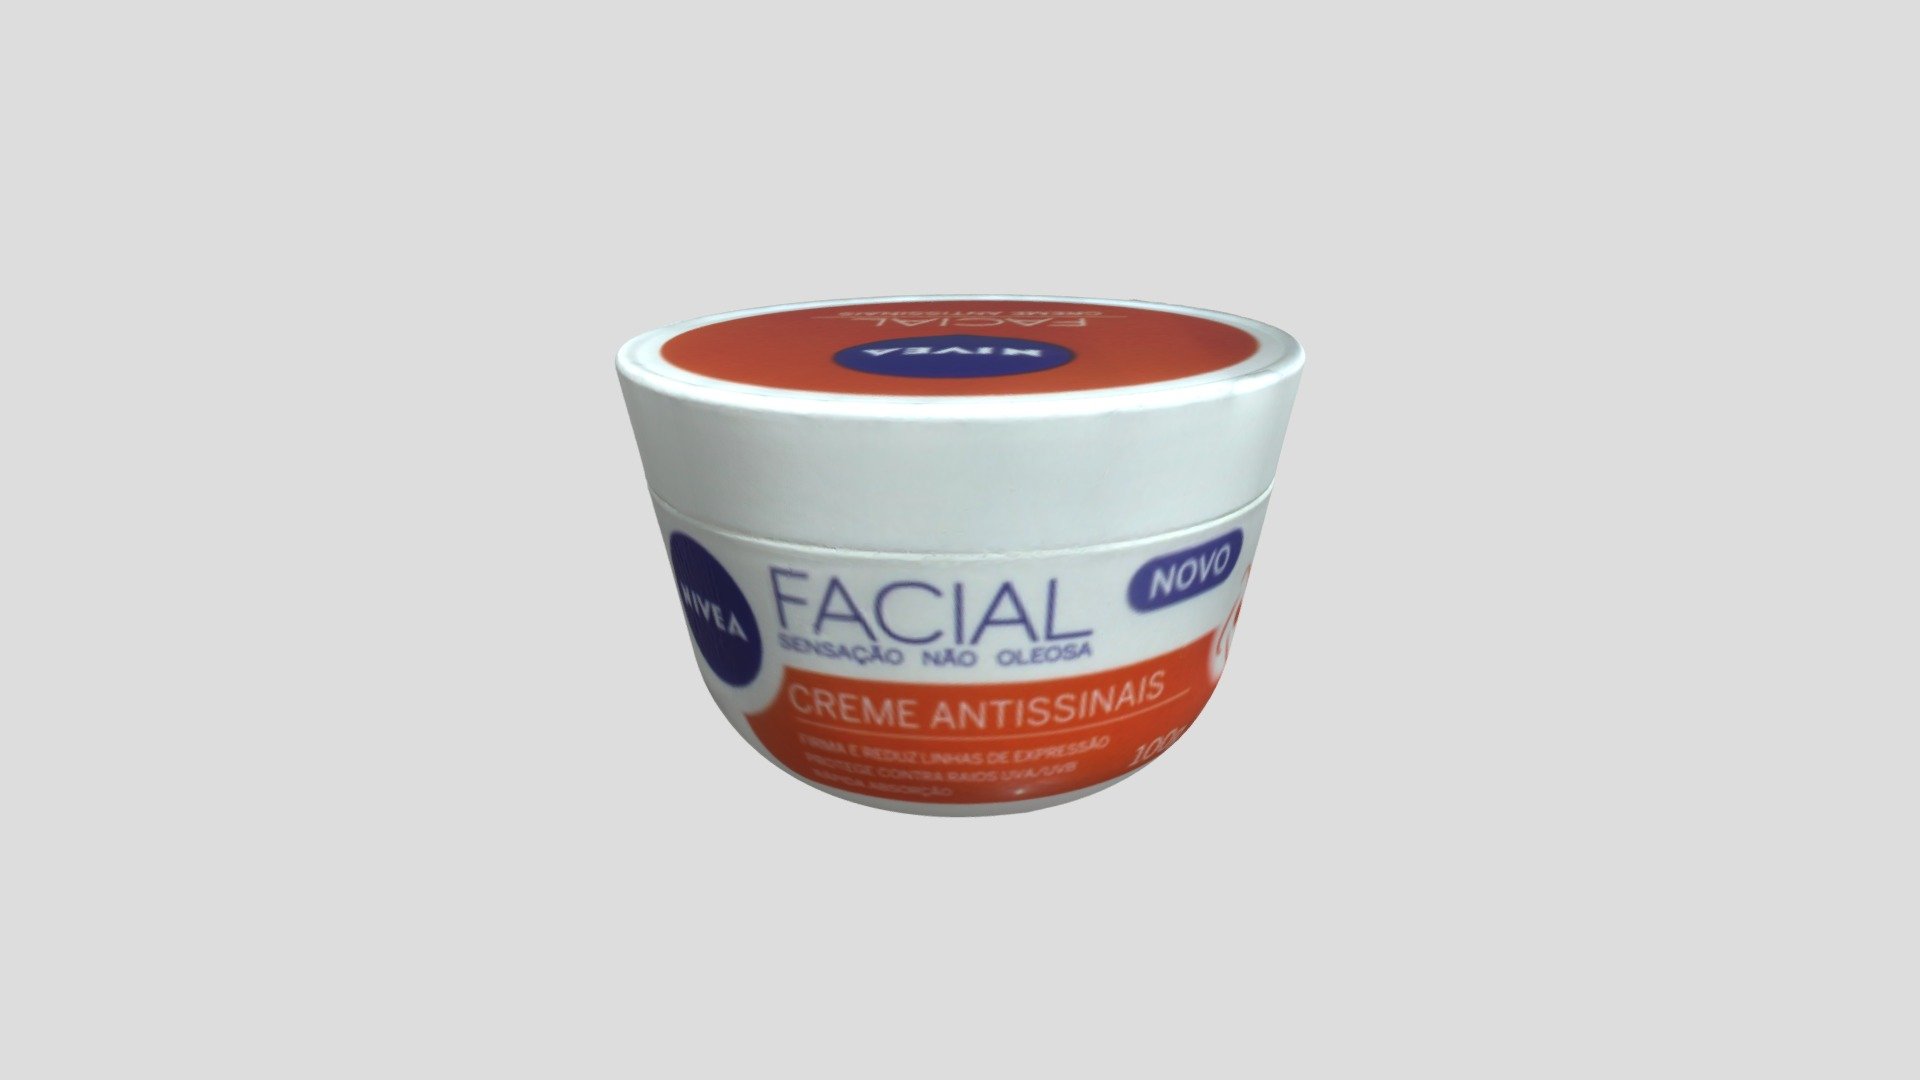 NIVEA - (B) Facial creme antissinais - 3D model by 42LabsCS 3d model